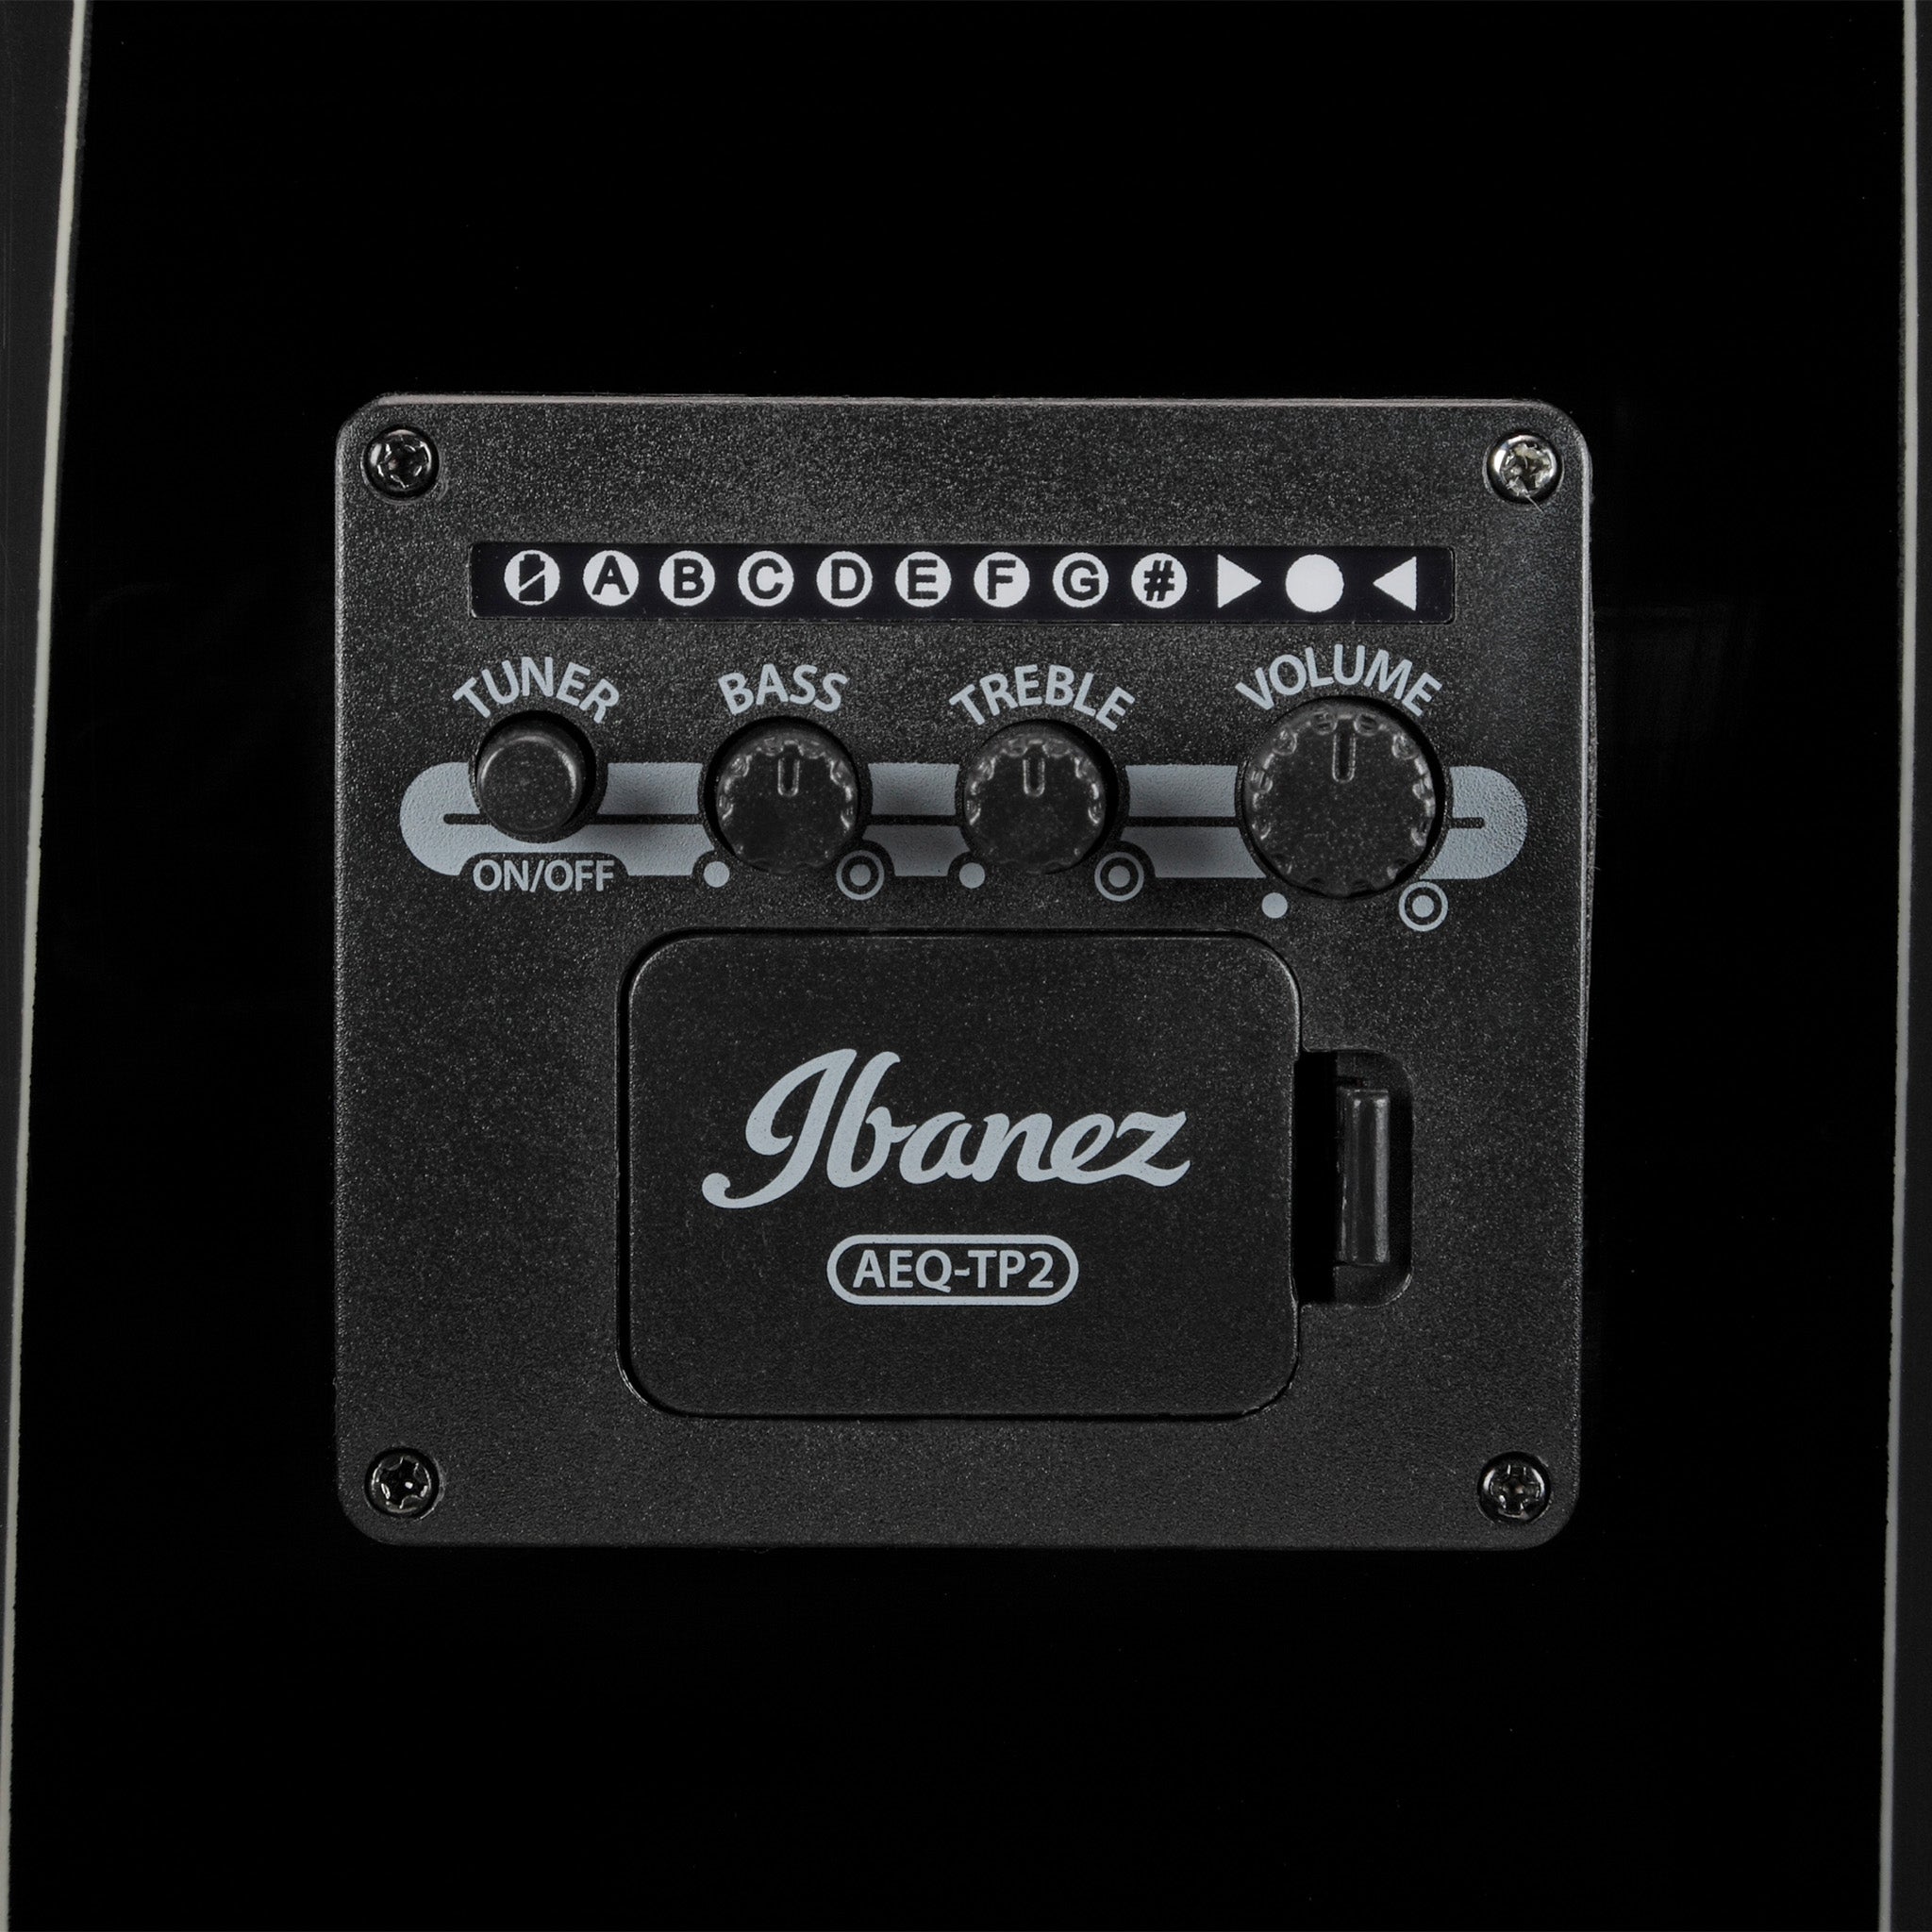 Ibanez GA11CE Classical Acoustic Guitar - Black